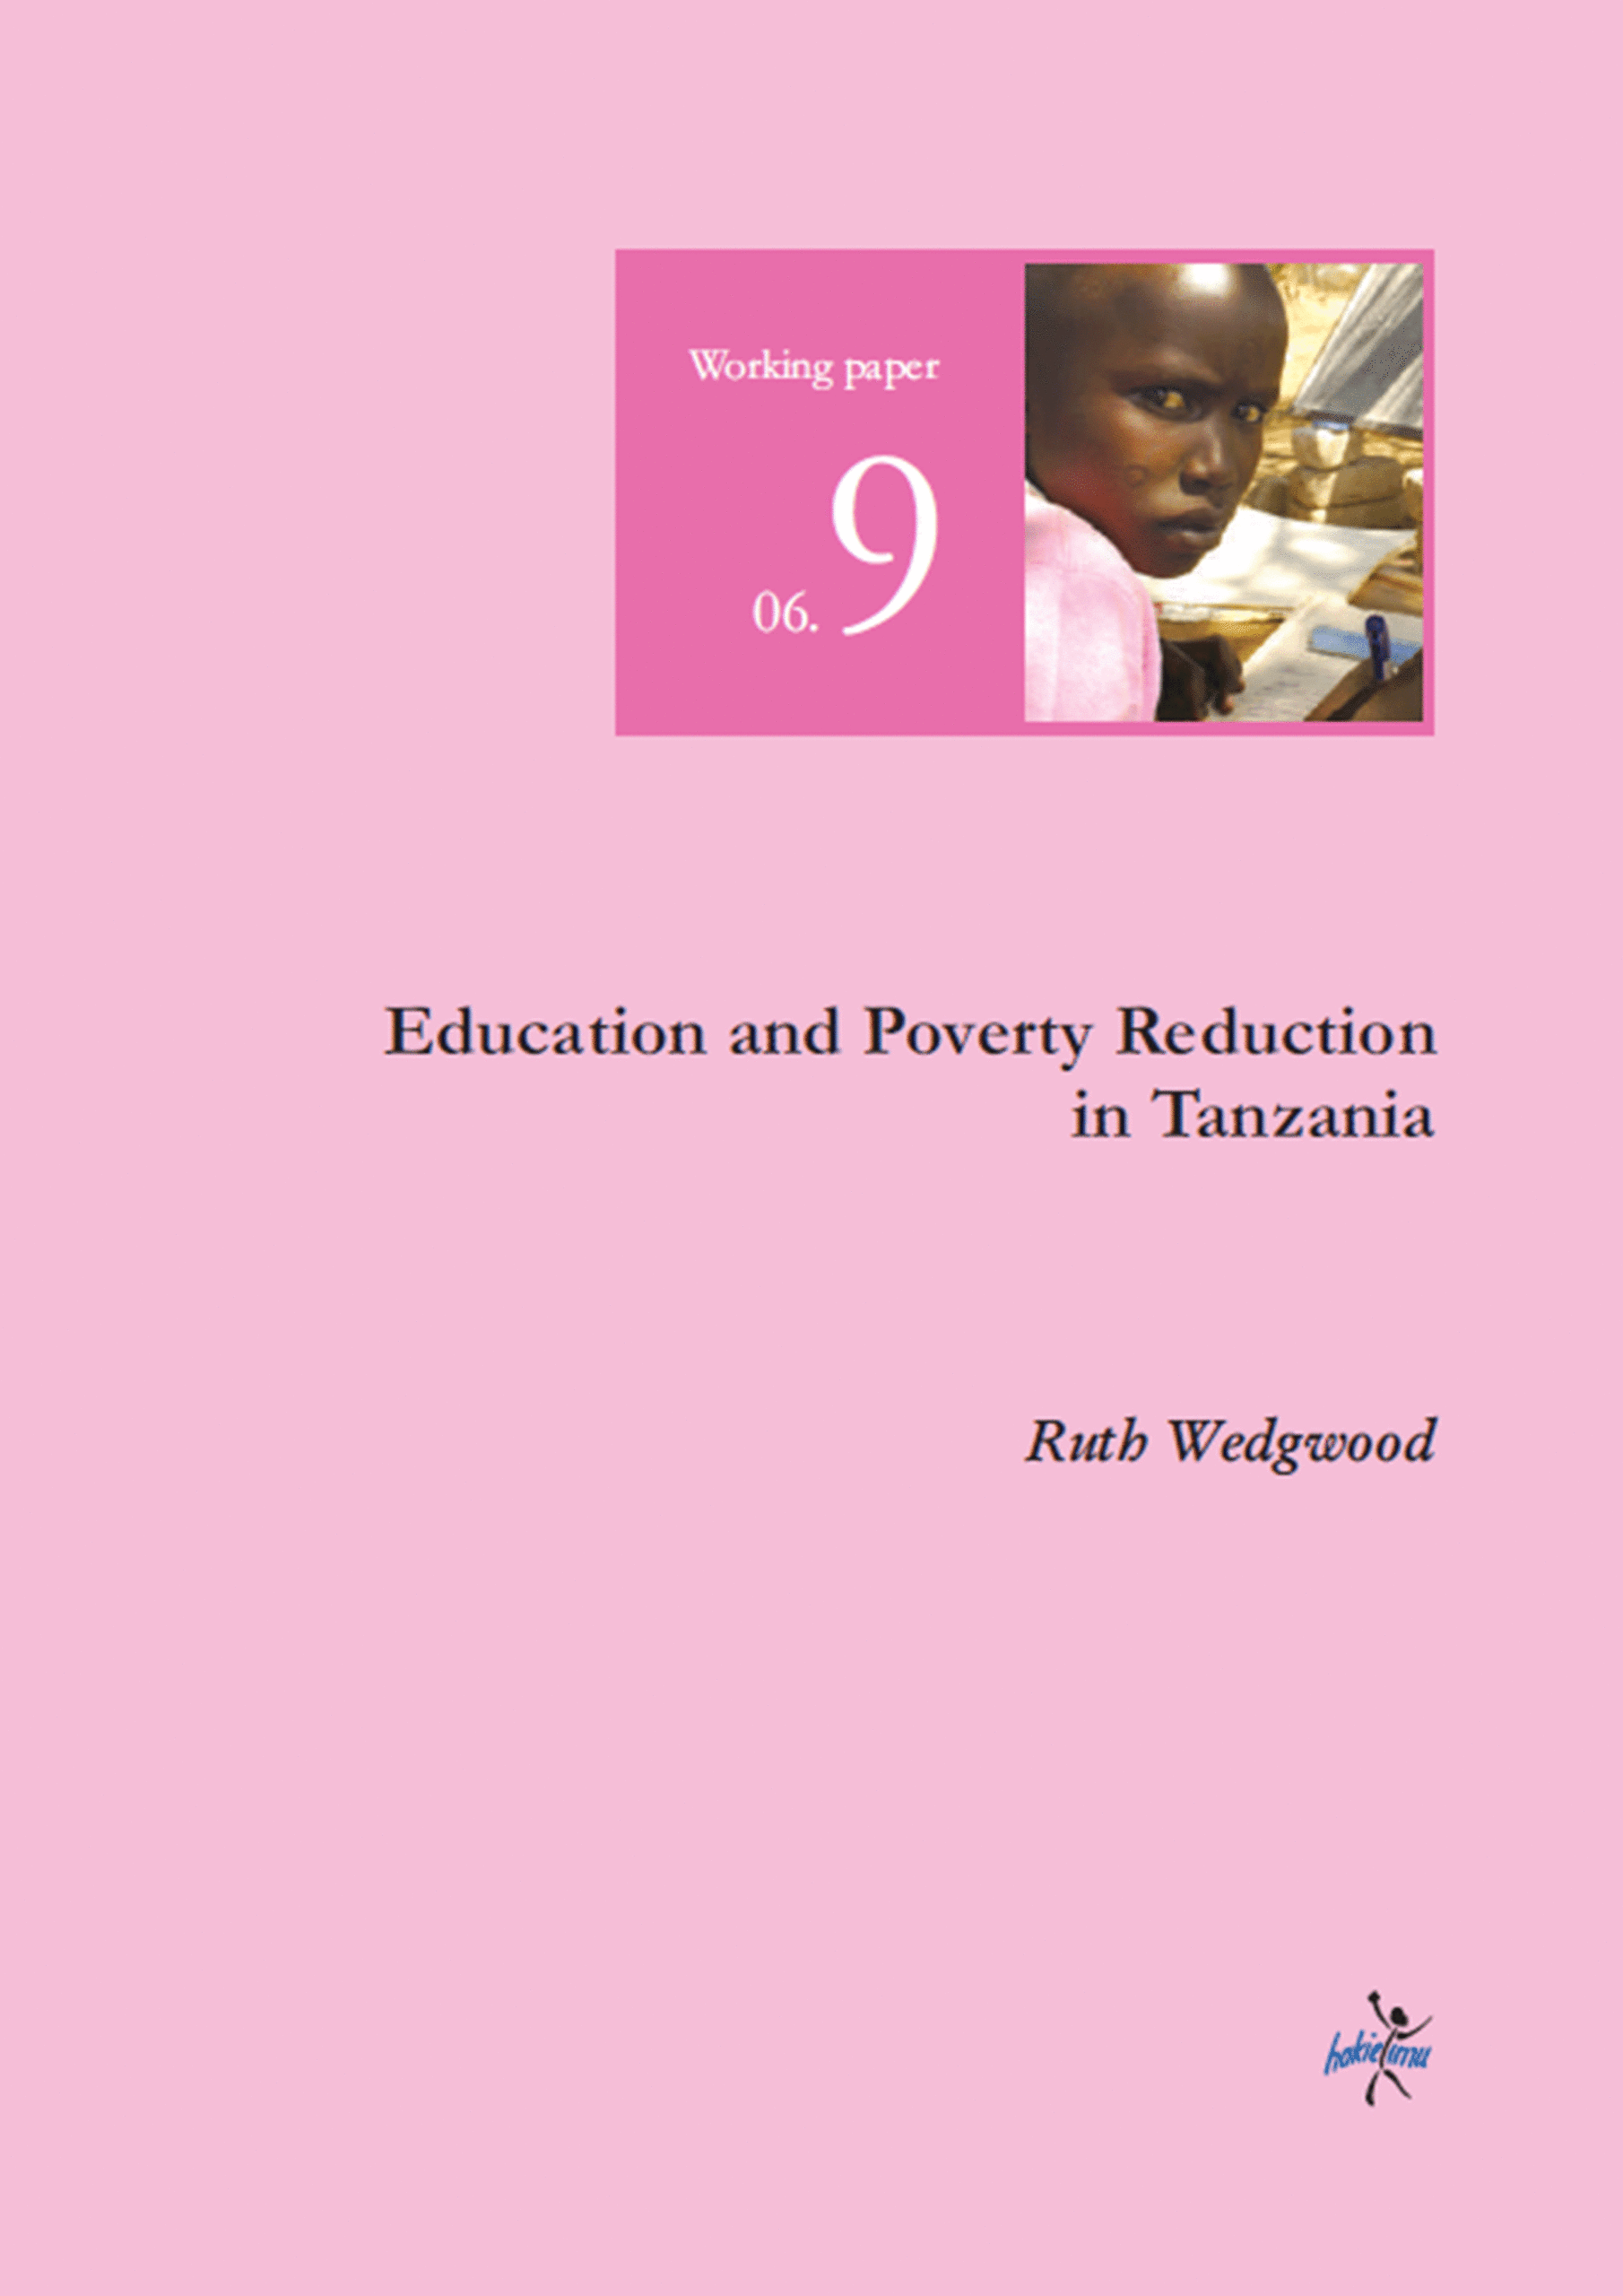 research proposal on poverty in tanzania pdf